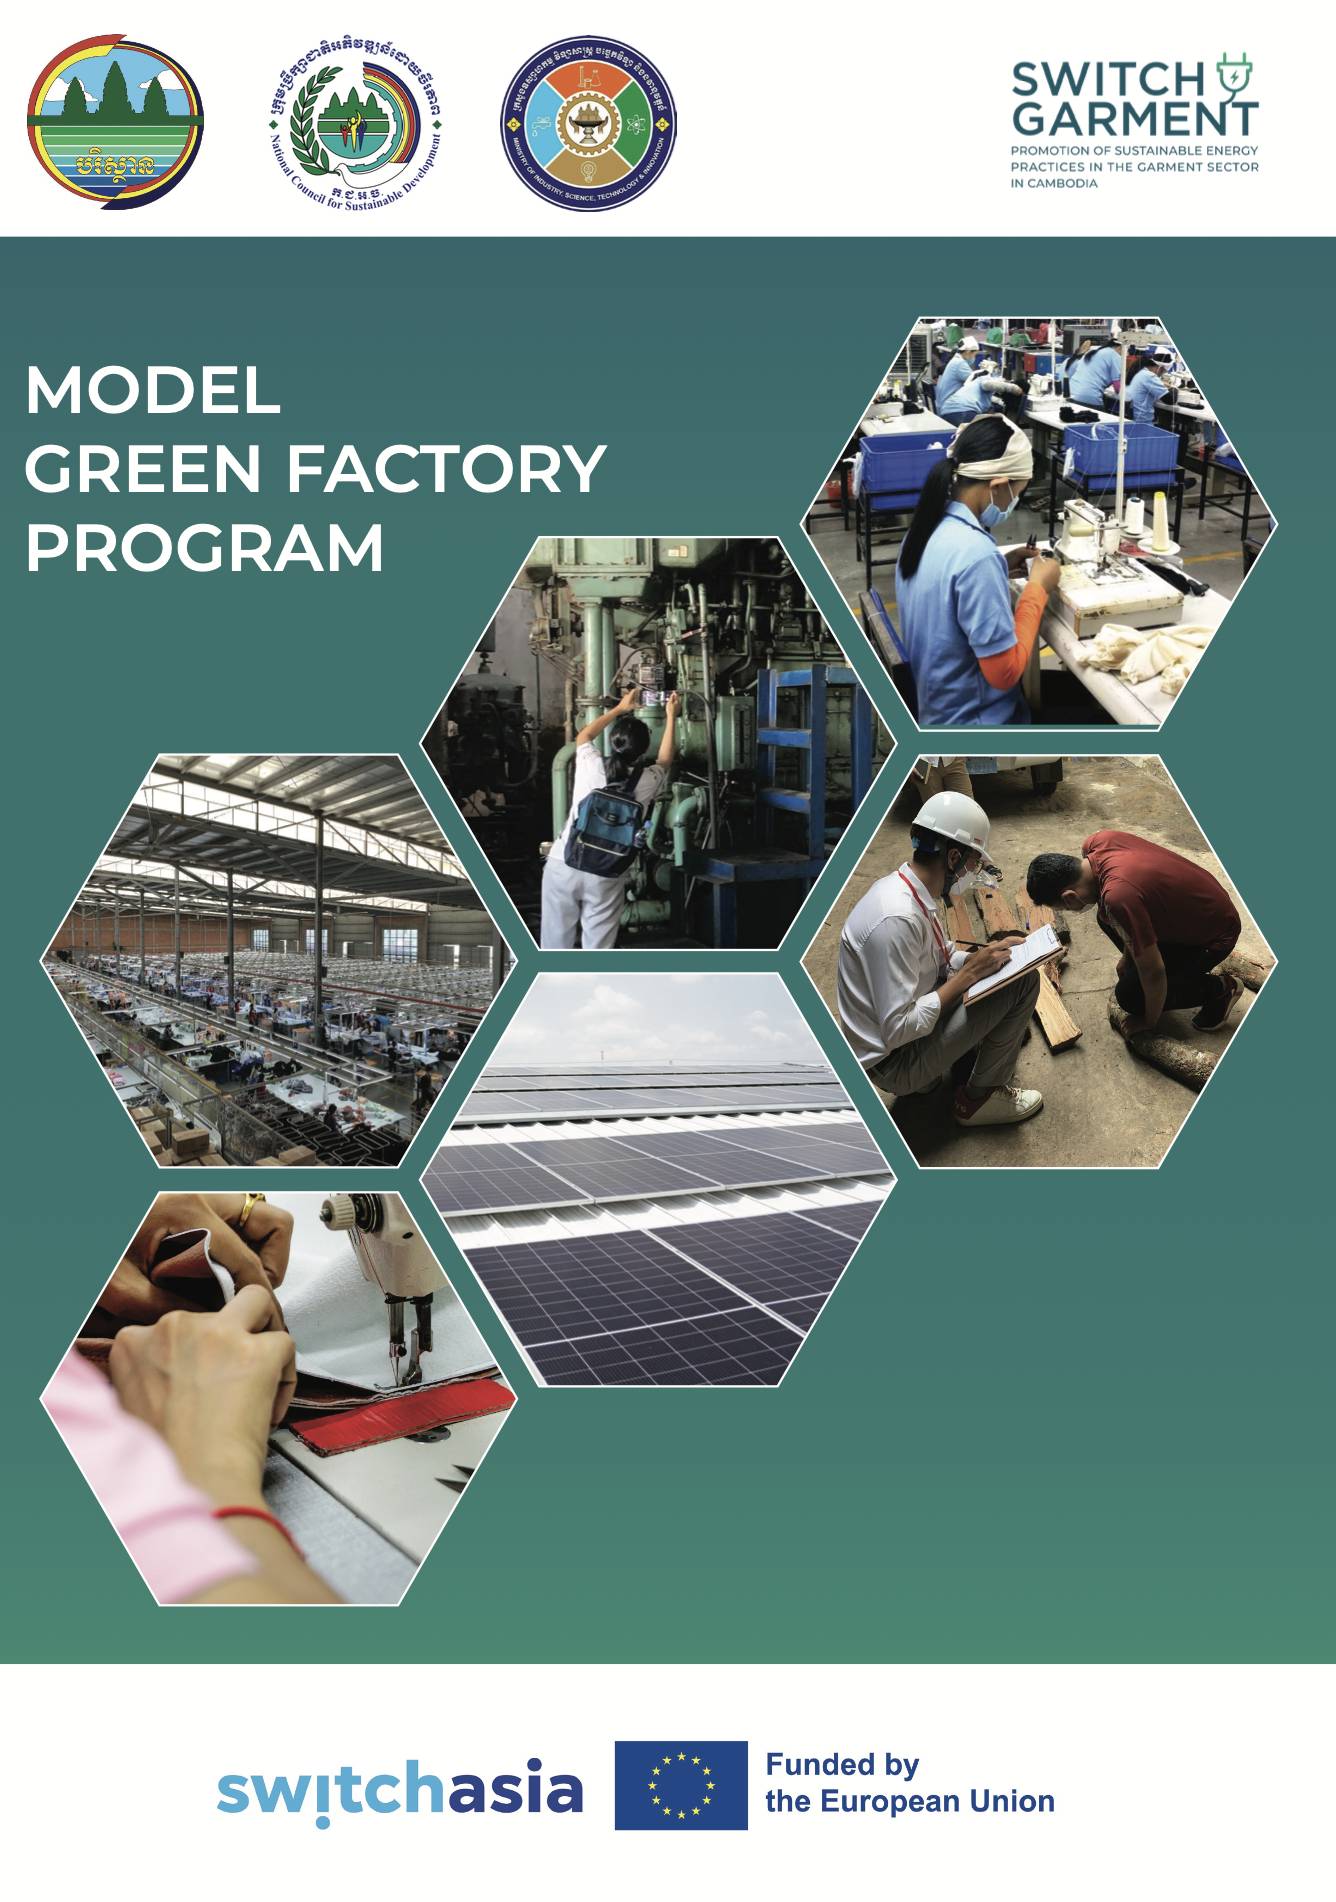 Model Green Factory Program in Cambodia